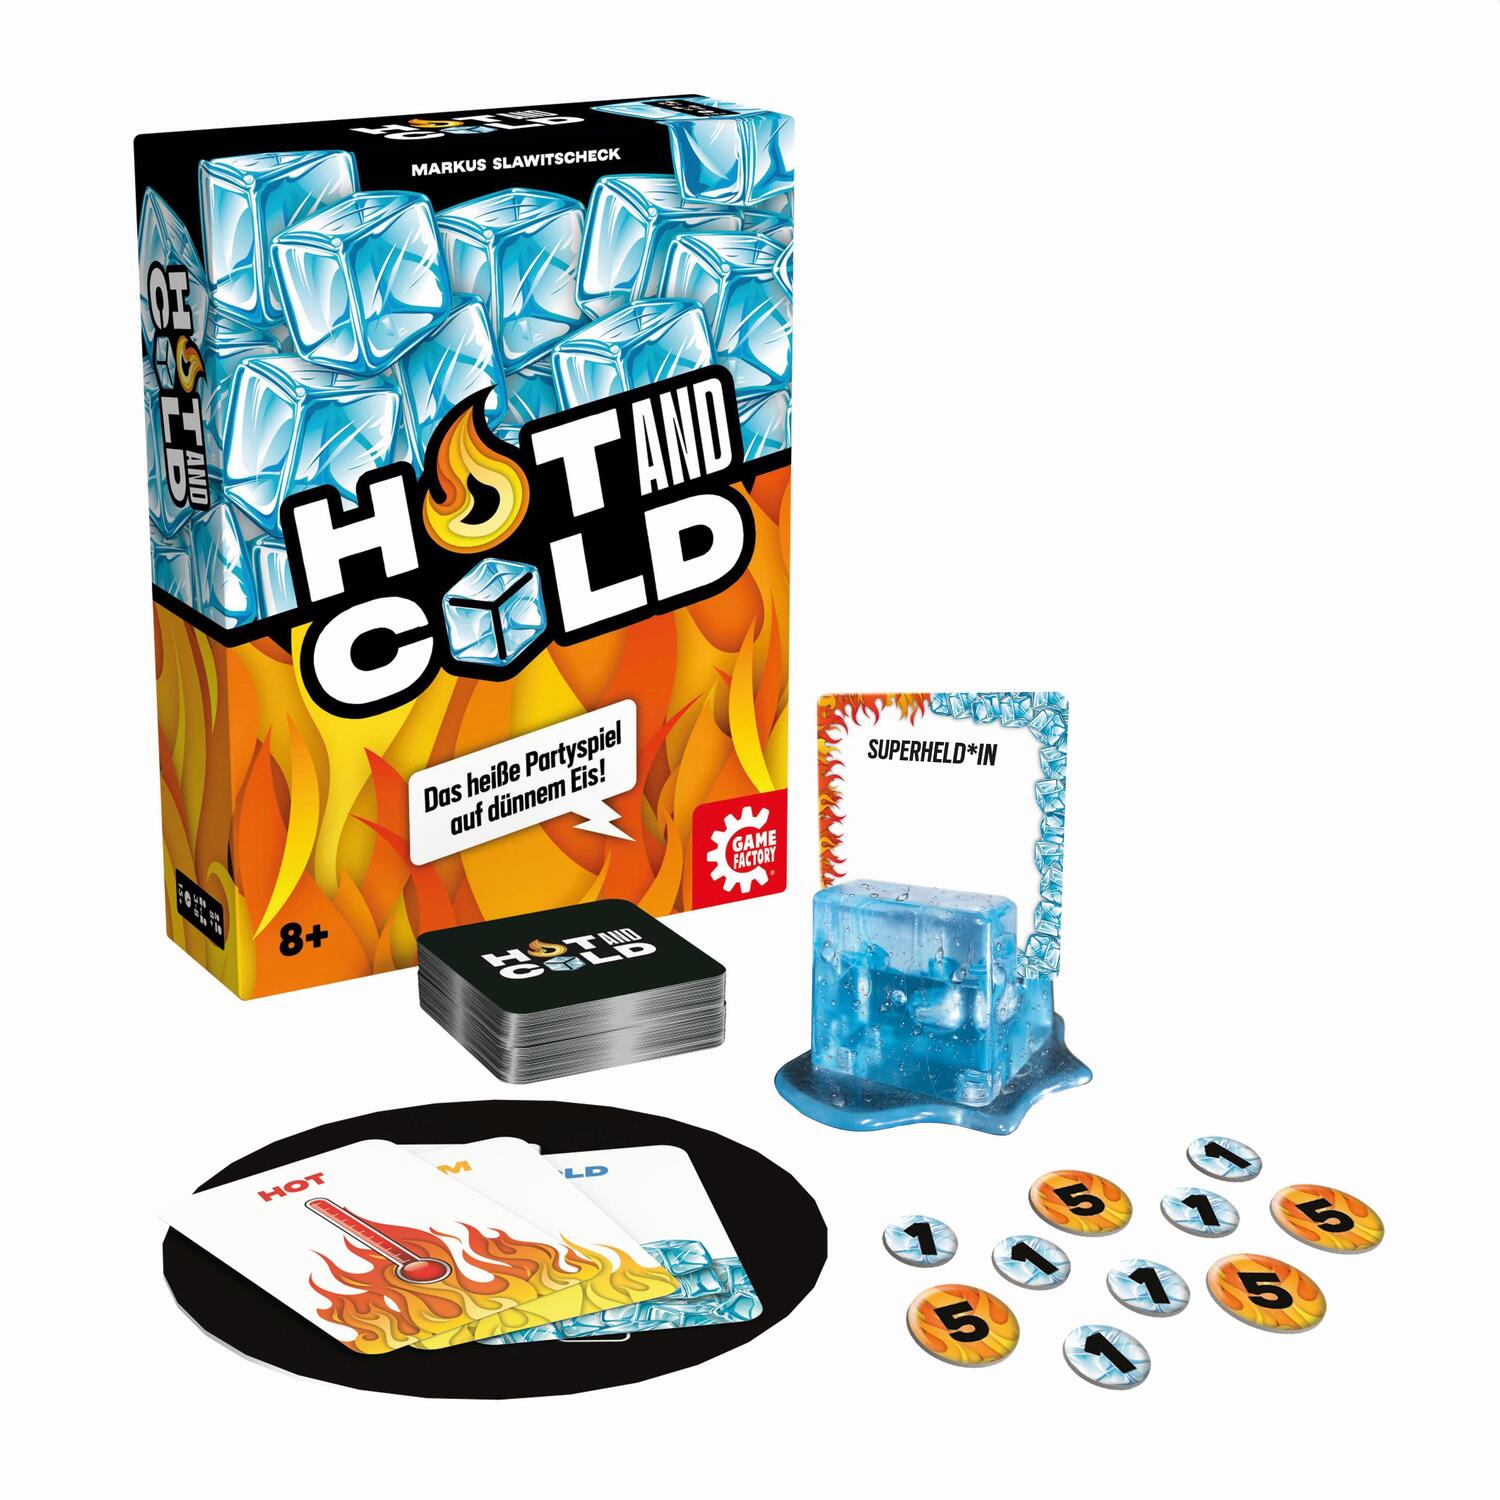 Bild: 7640142762966 | GAMEFACTORY - Hot and Cold | Gamefactory | Spiel | Deutsch | 2022